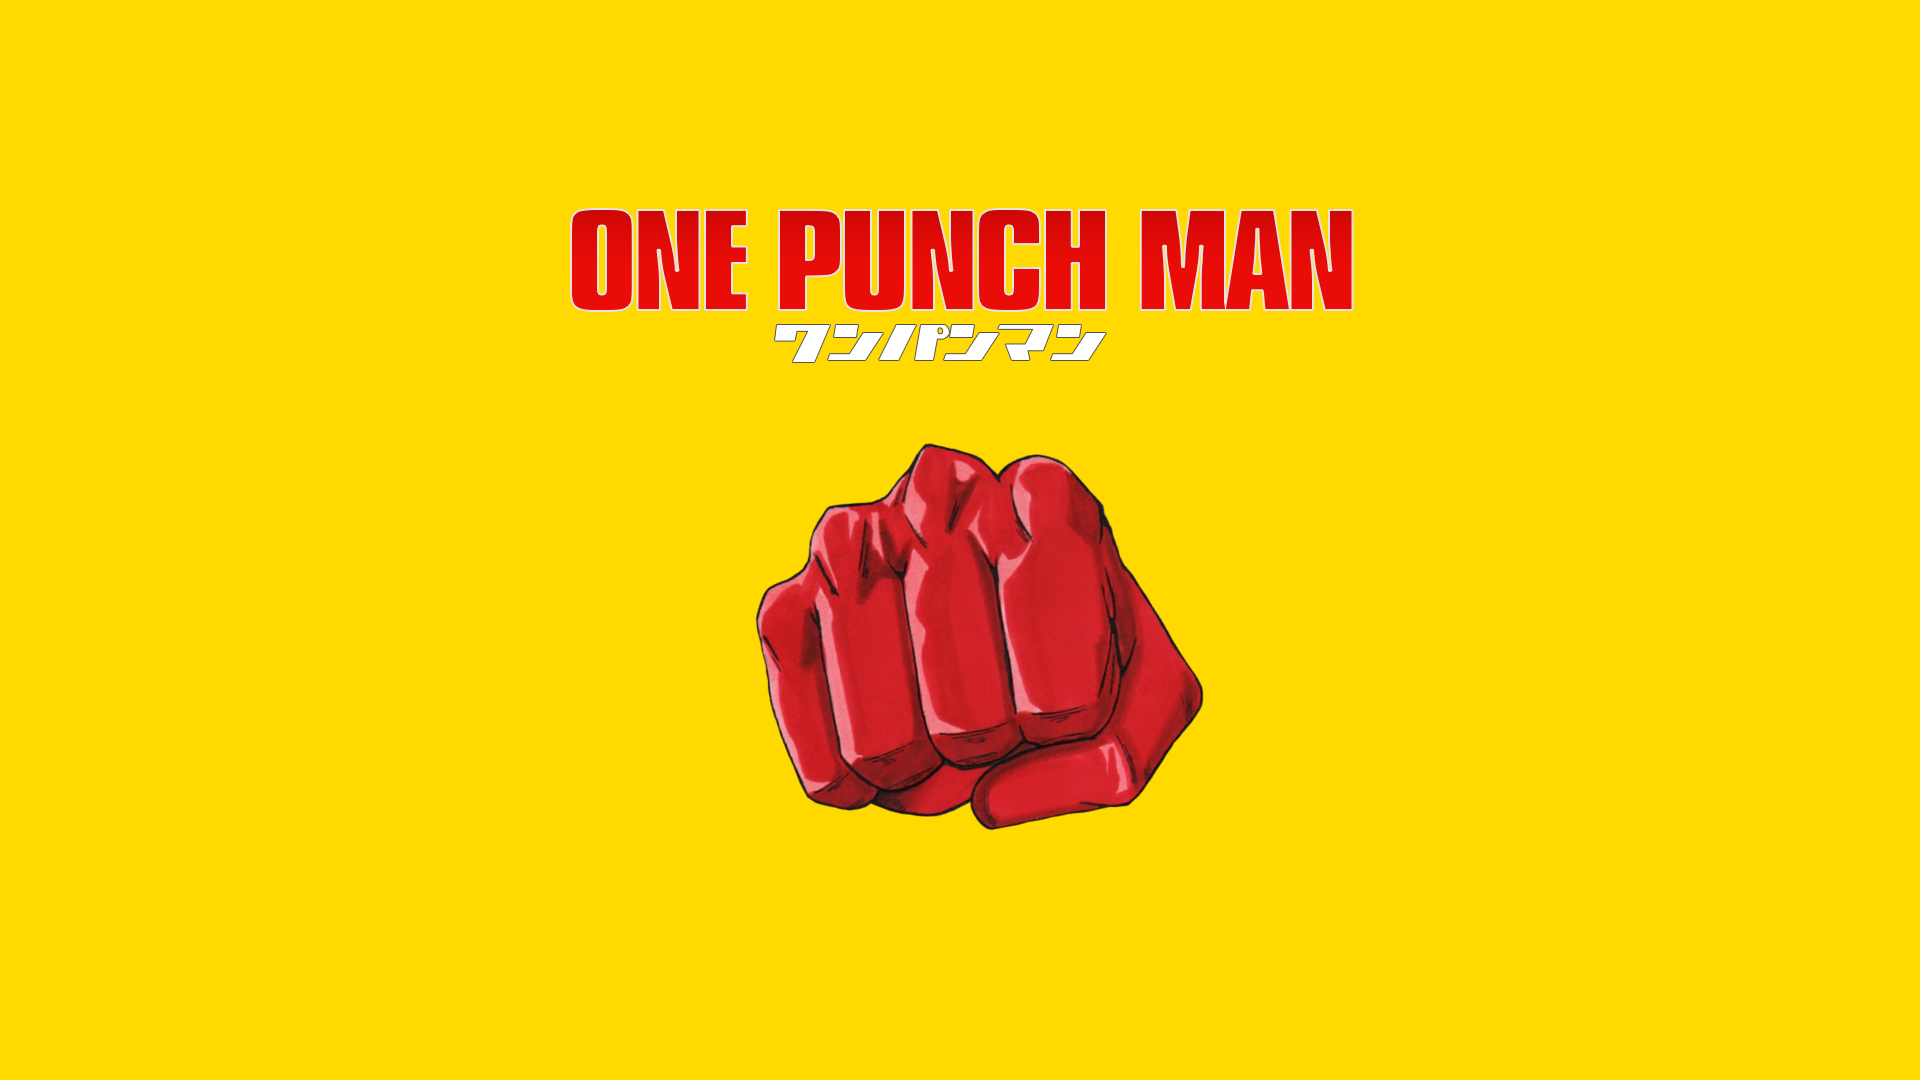 one-punch man season 3: One-Punch Man Season 3: What to expect, cast &  release details - The Economic Times